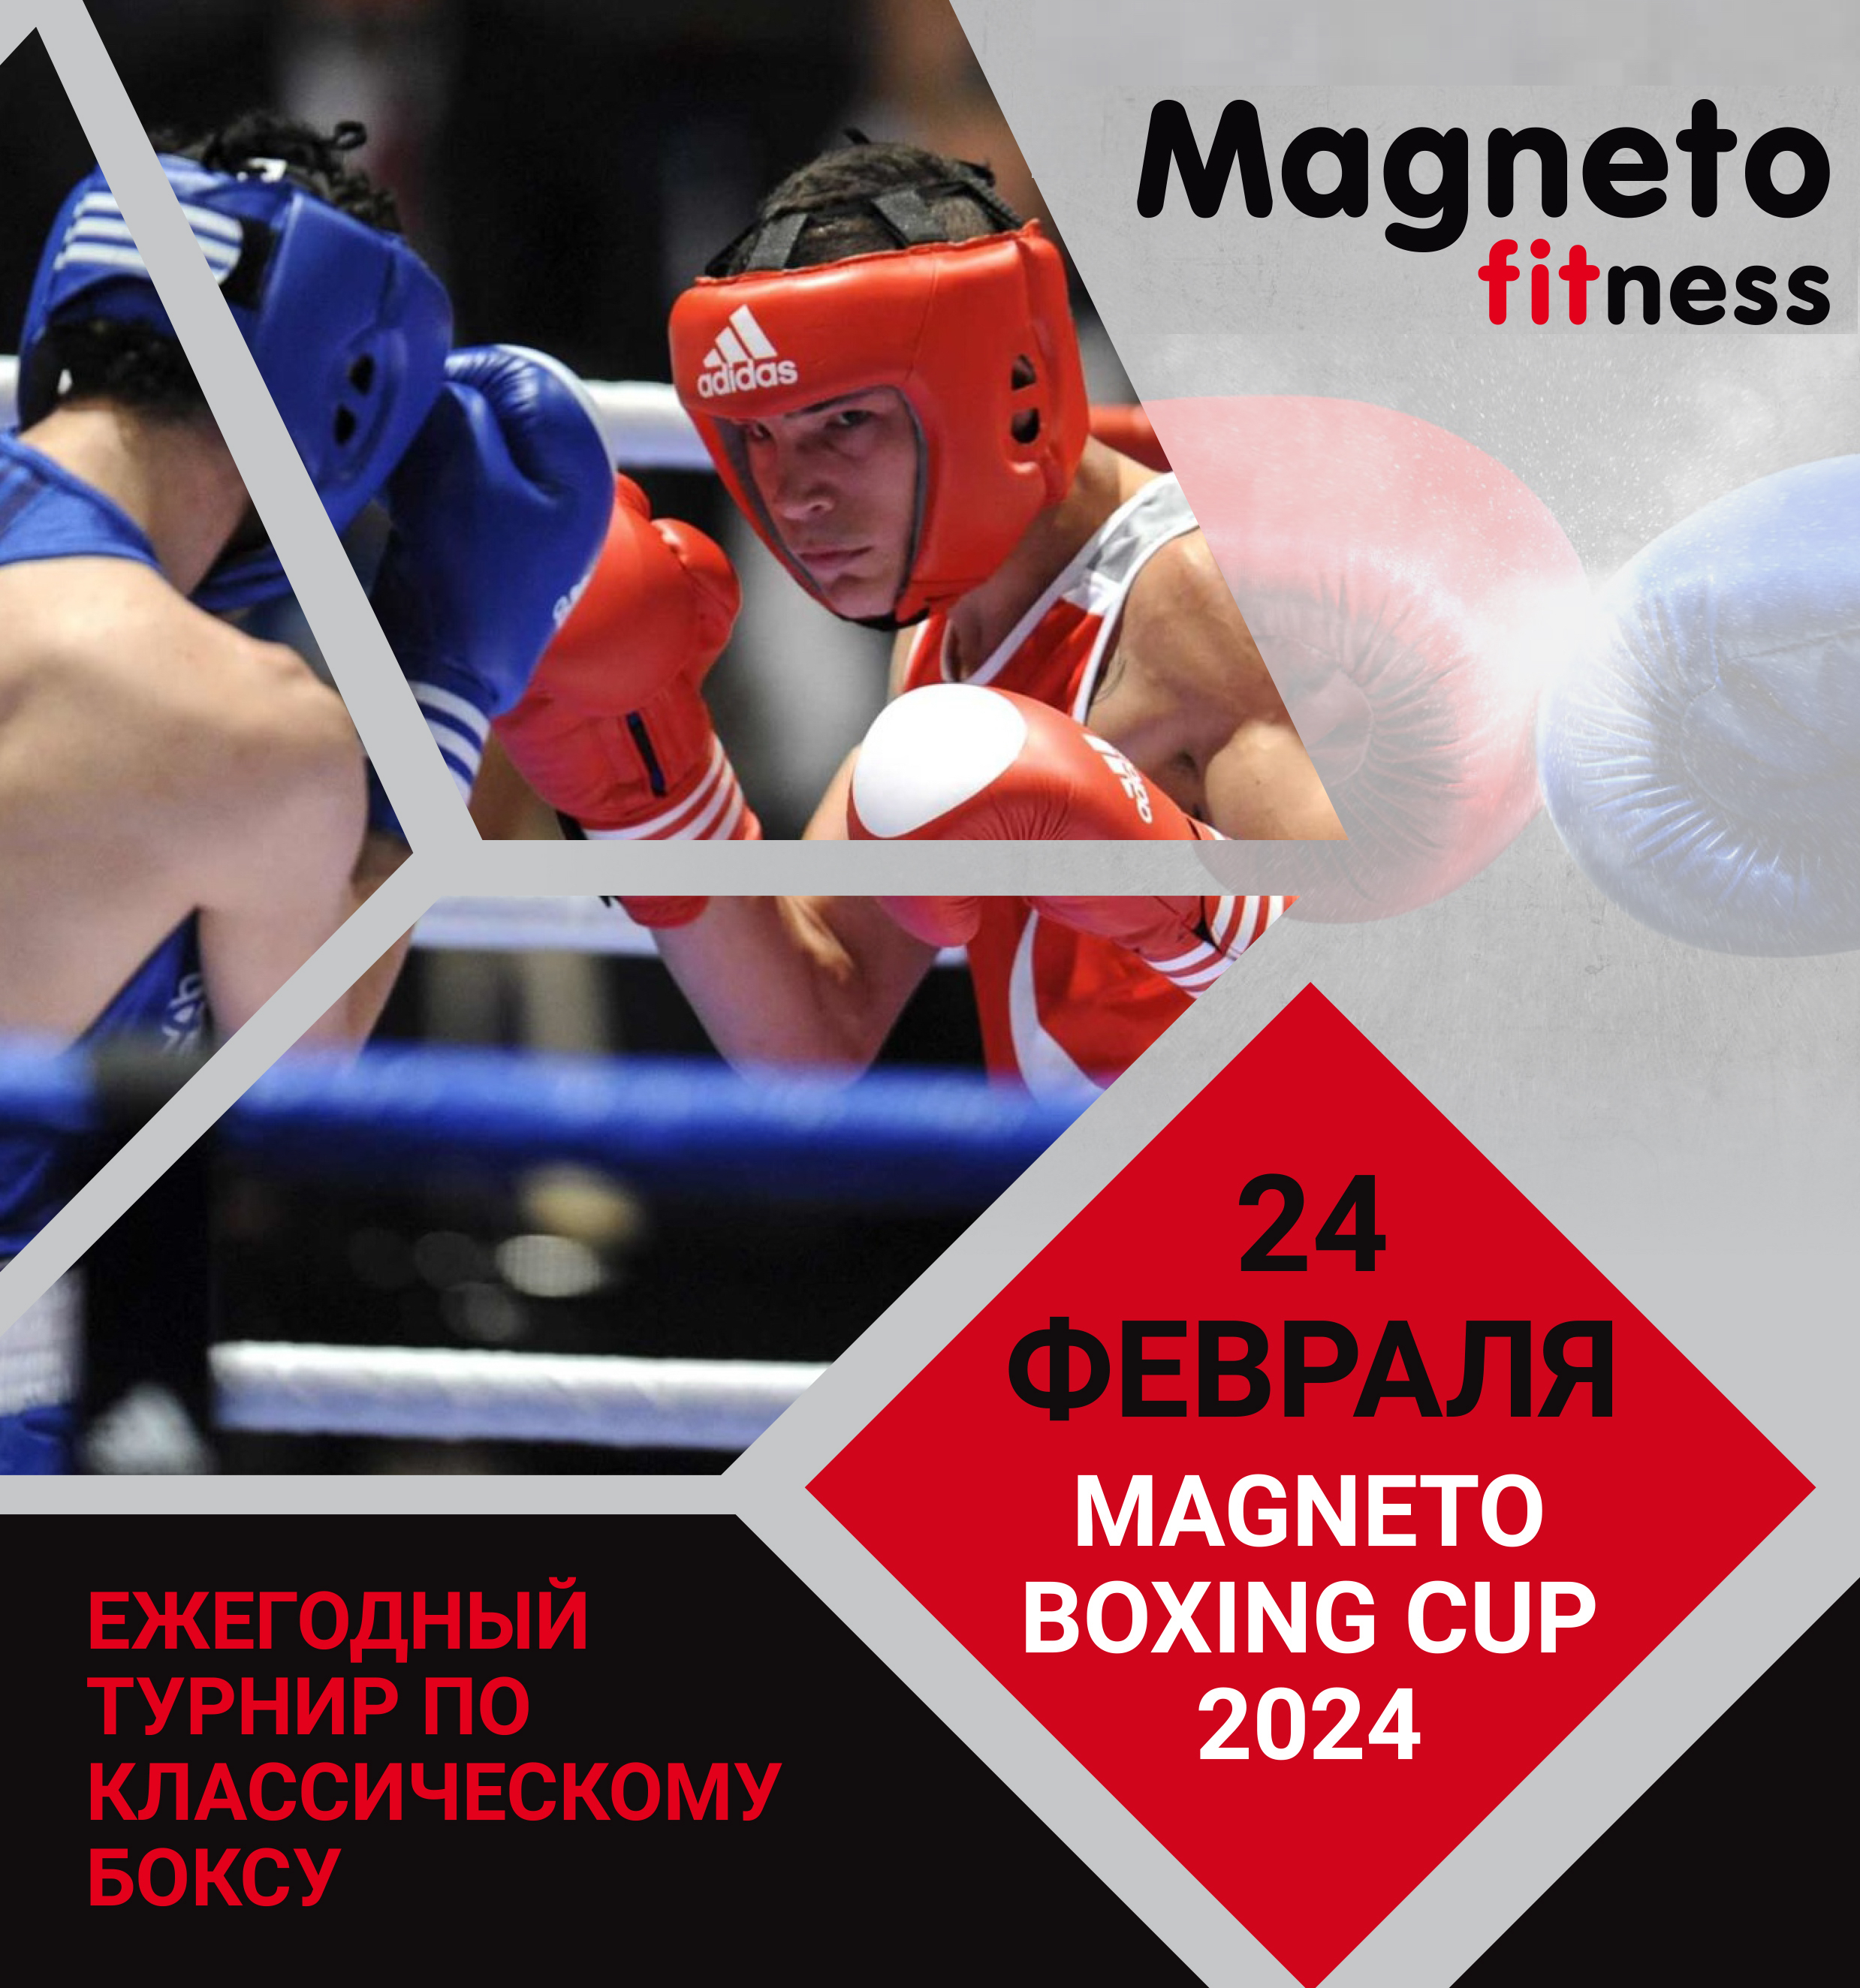 Magneto boxing cup 2024 - Magneto Fitness Марьино